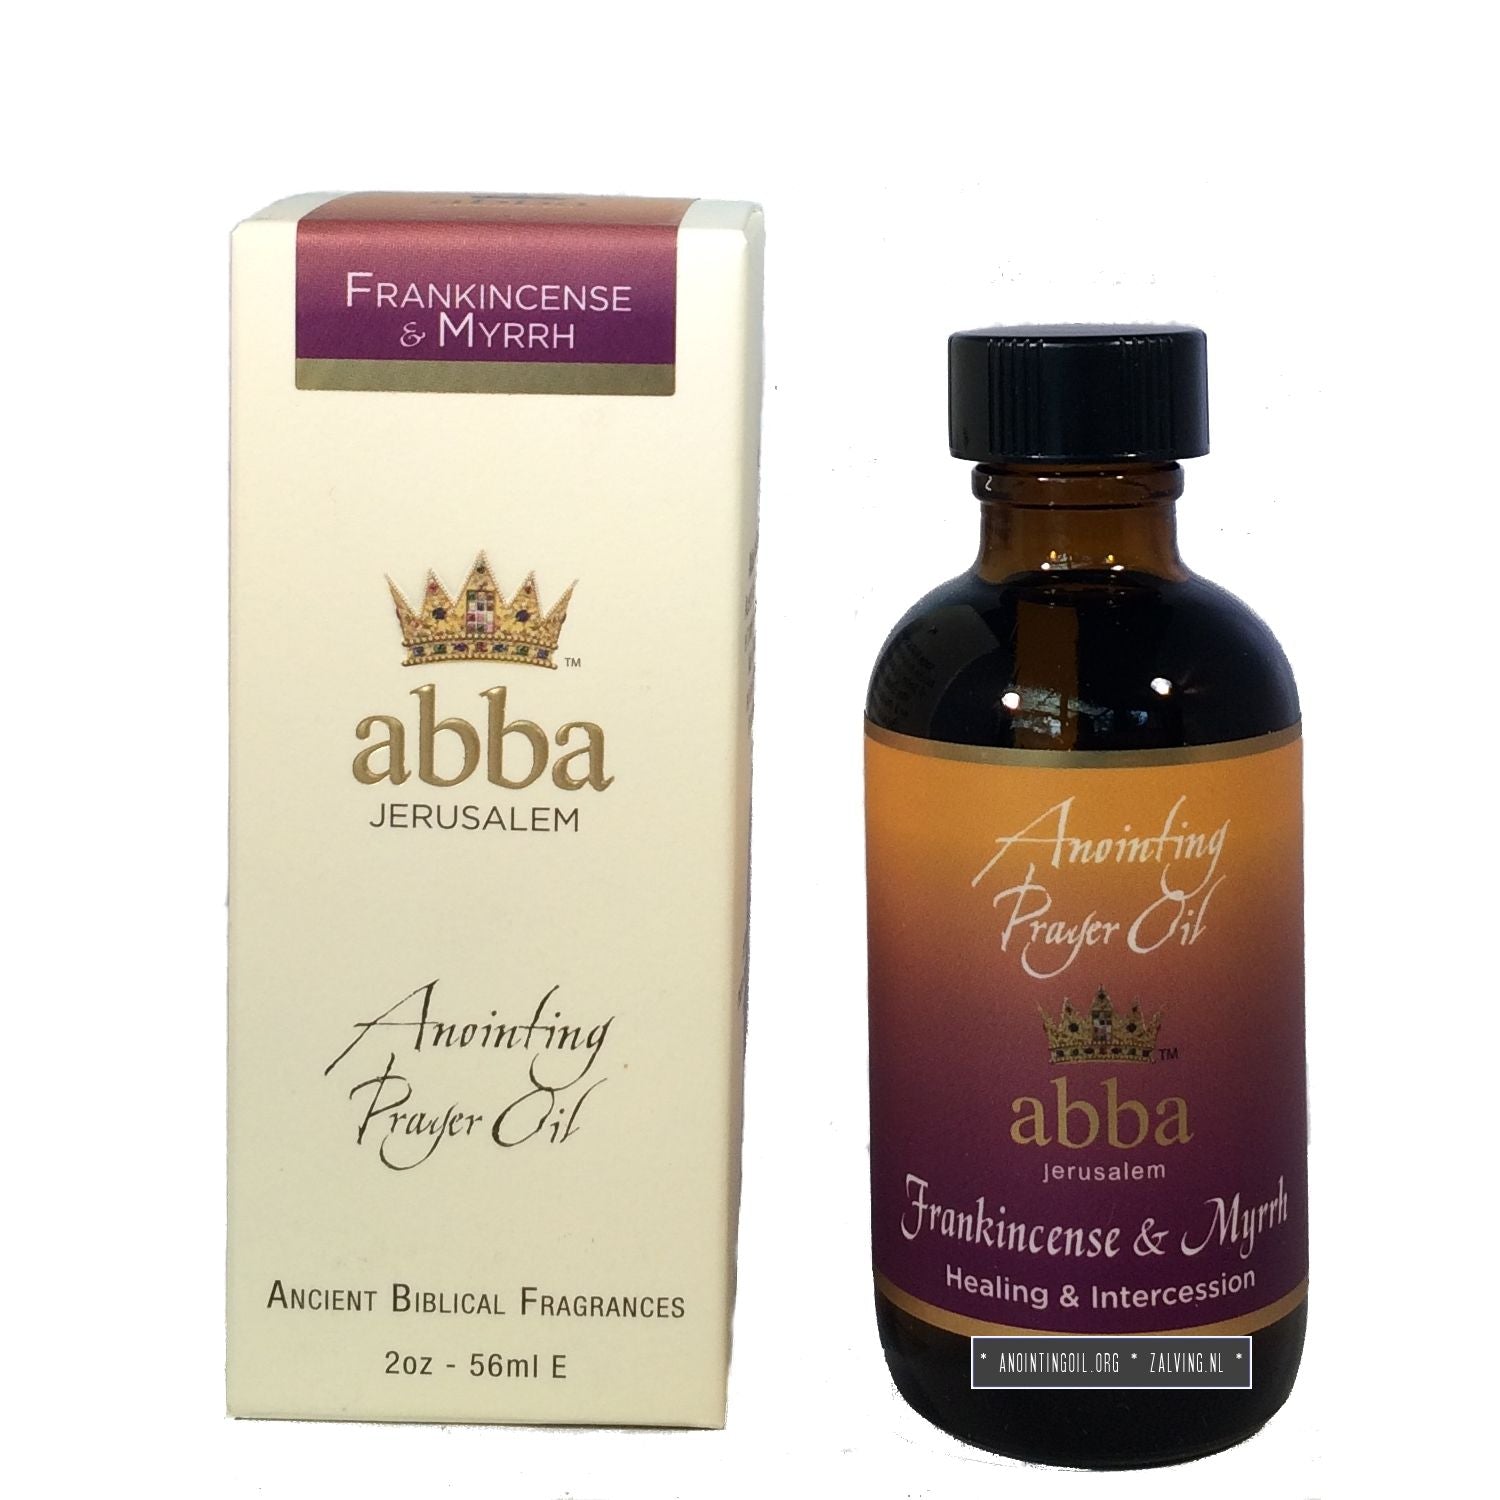 Frankincense & Myrrh (1/2 oz) Anointing Oil in Gift Box - Pathway